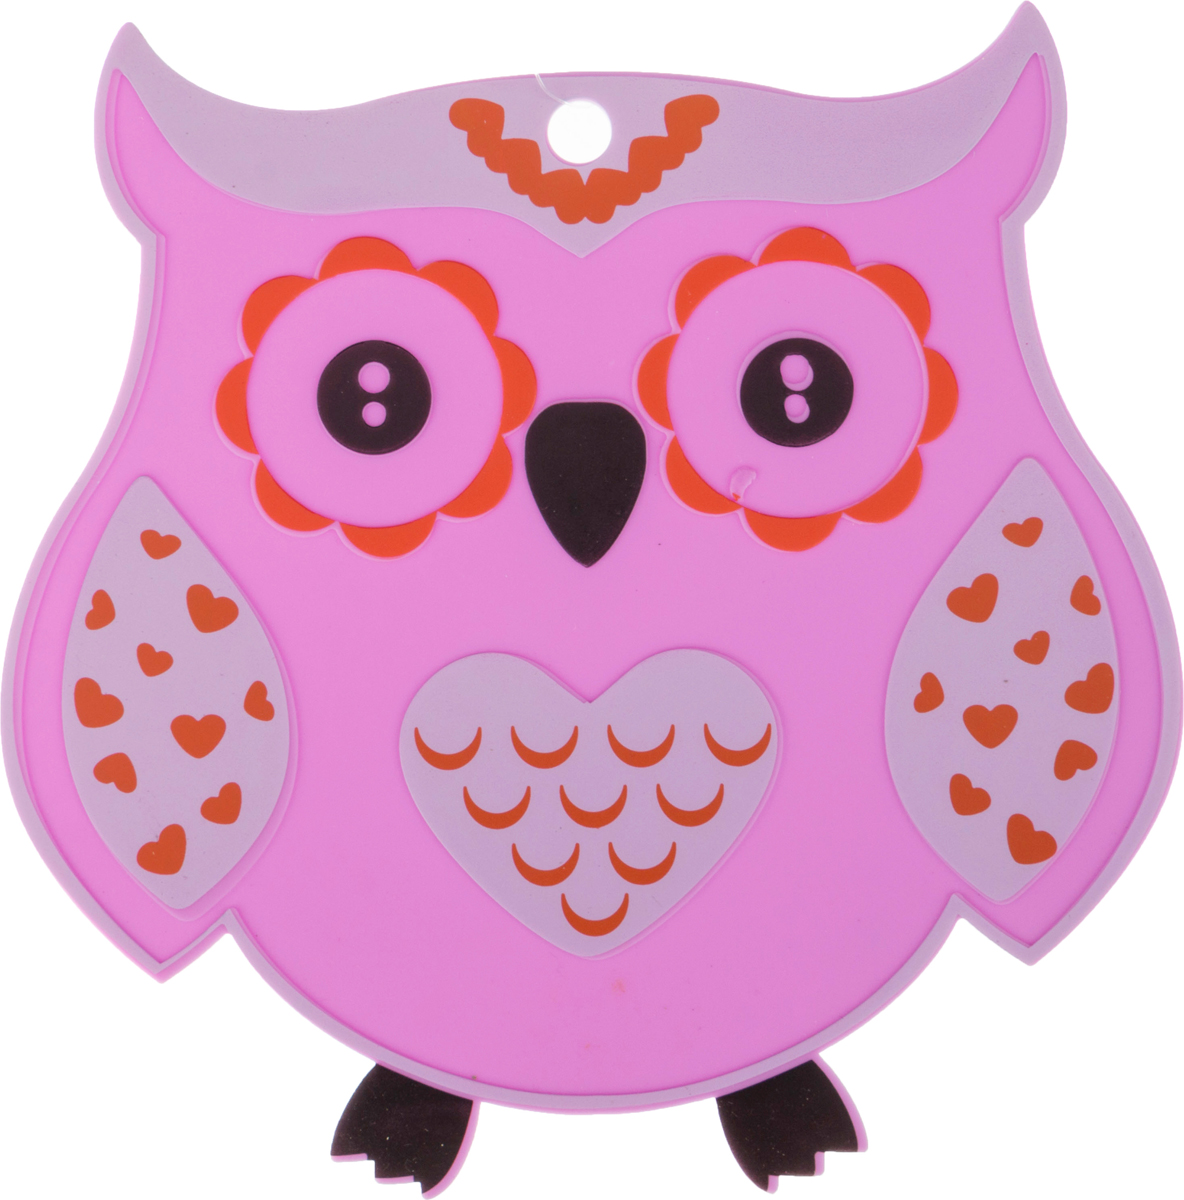 Подставка под горячее Owl pink, 19х18 см, Силикон, Agness, Китай